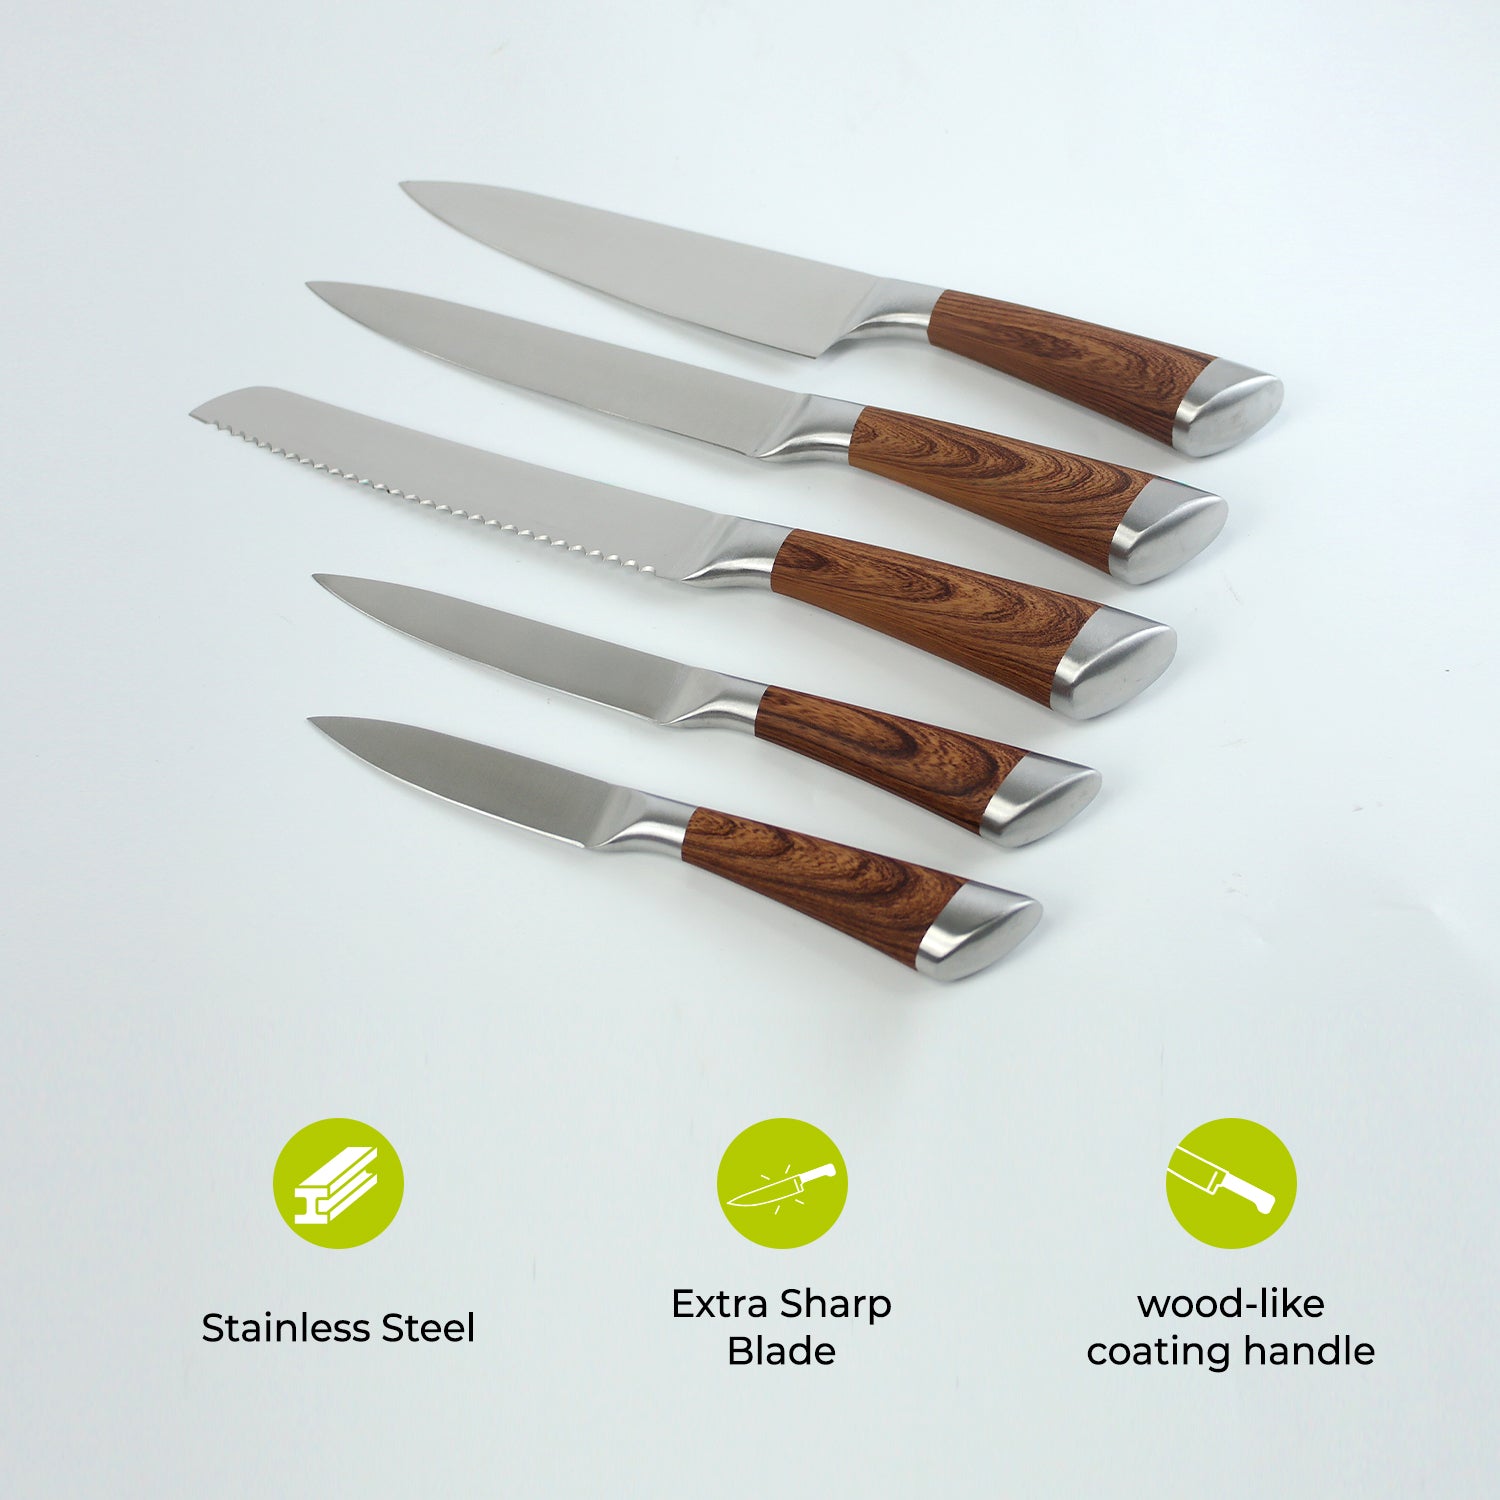 5-Piece Elegant Wooden Kitchen Knife Set With Holding Block